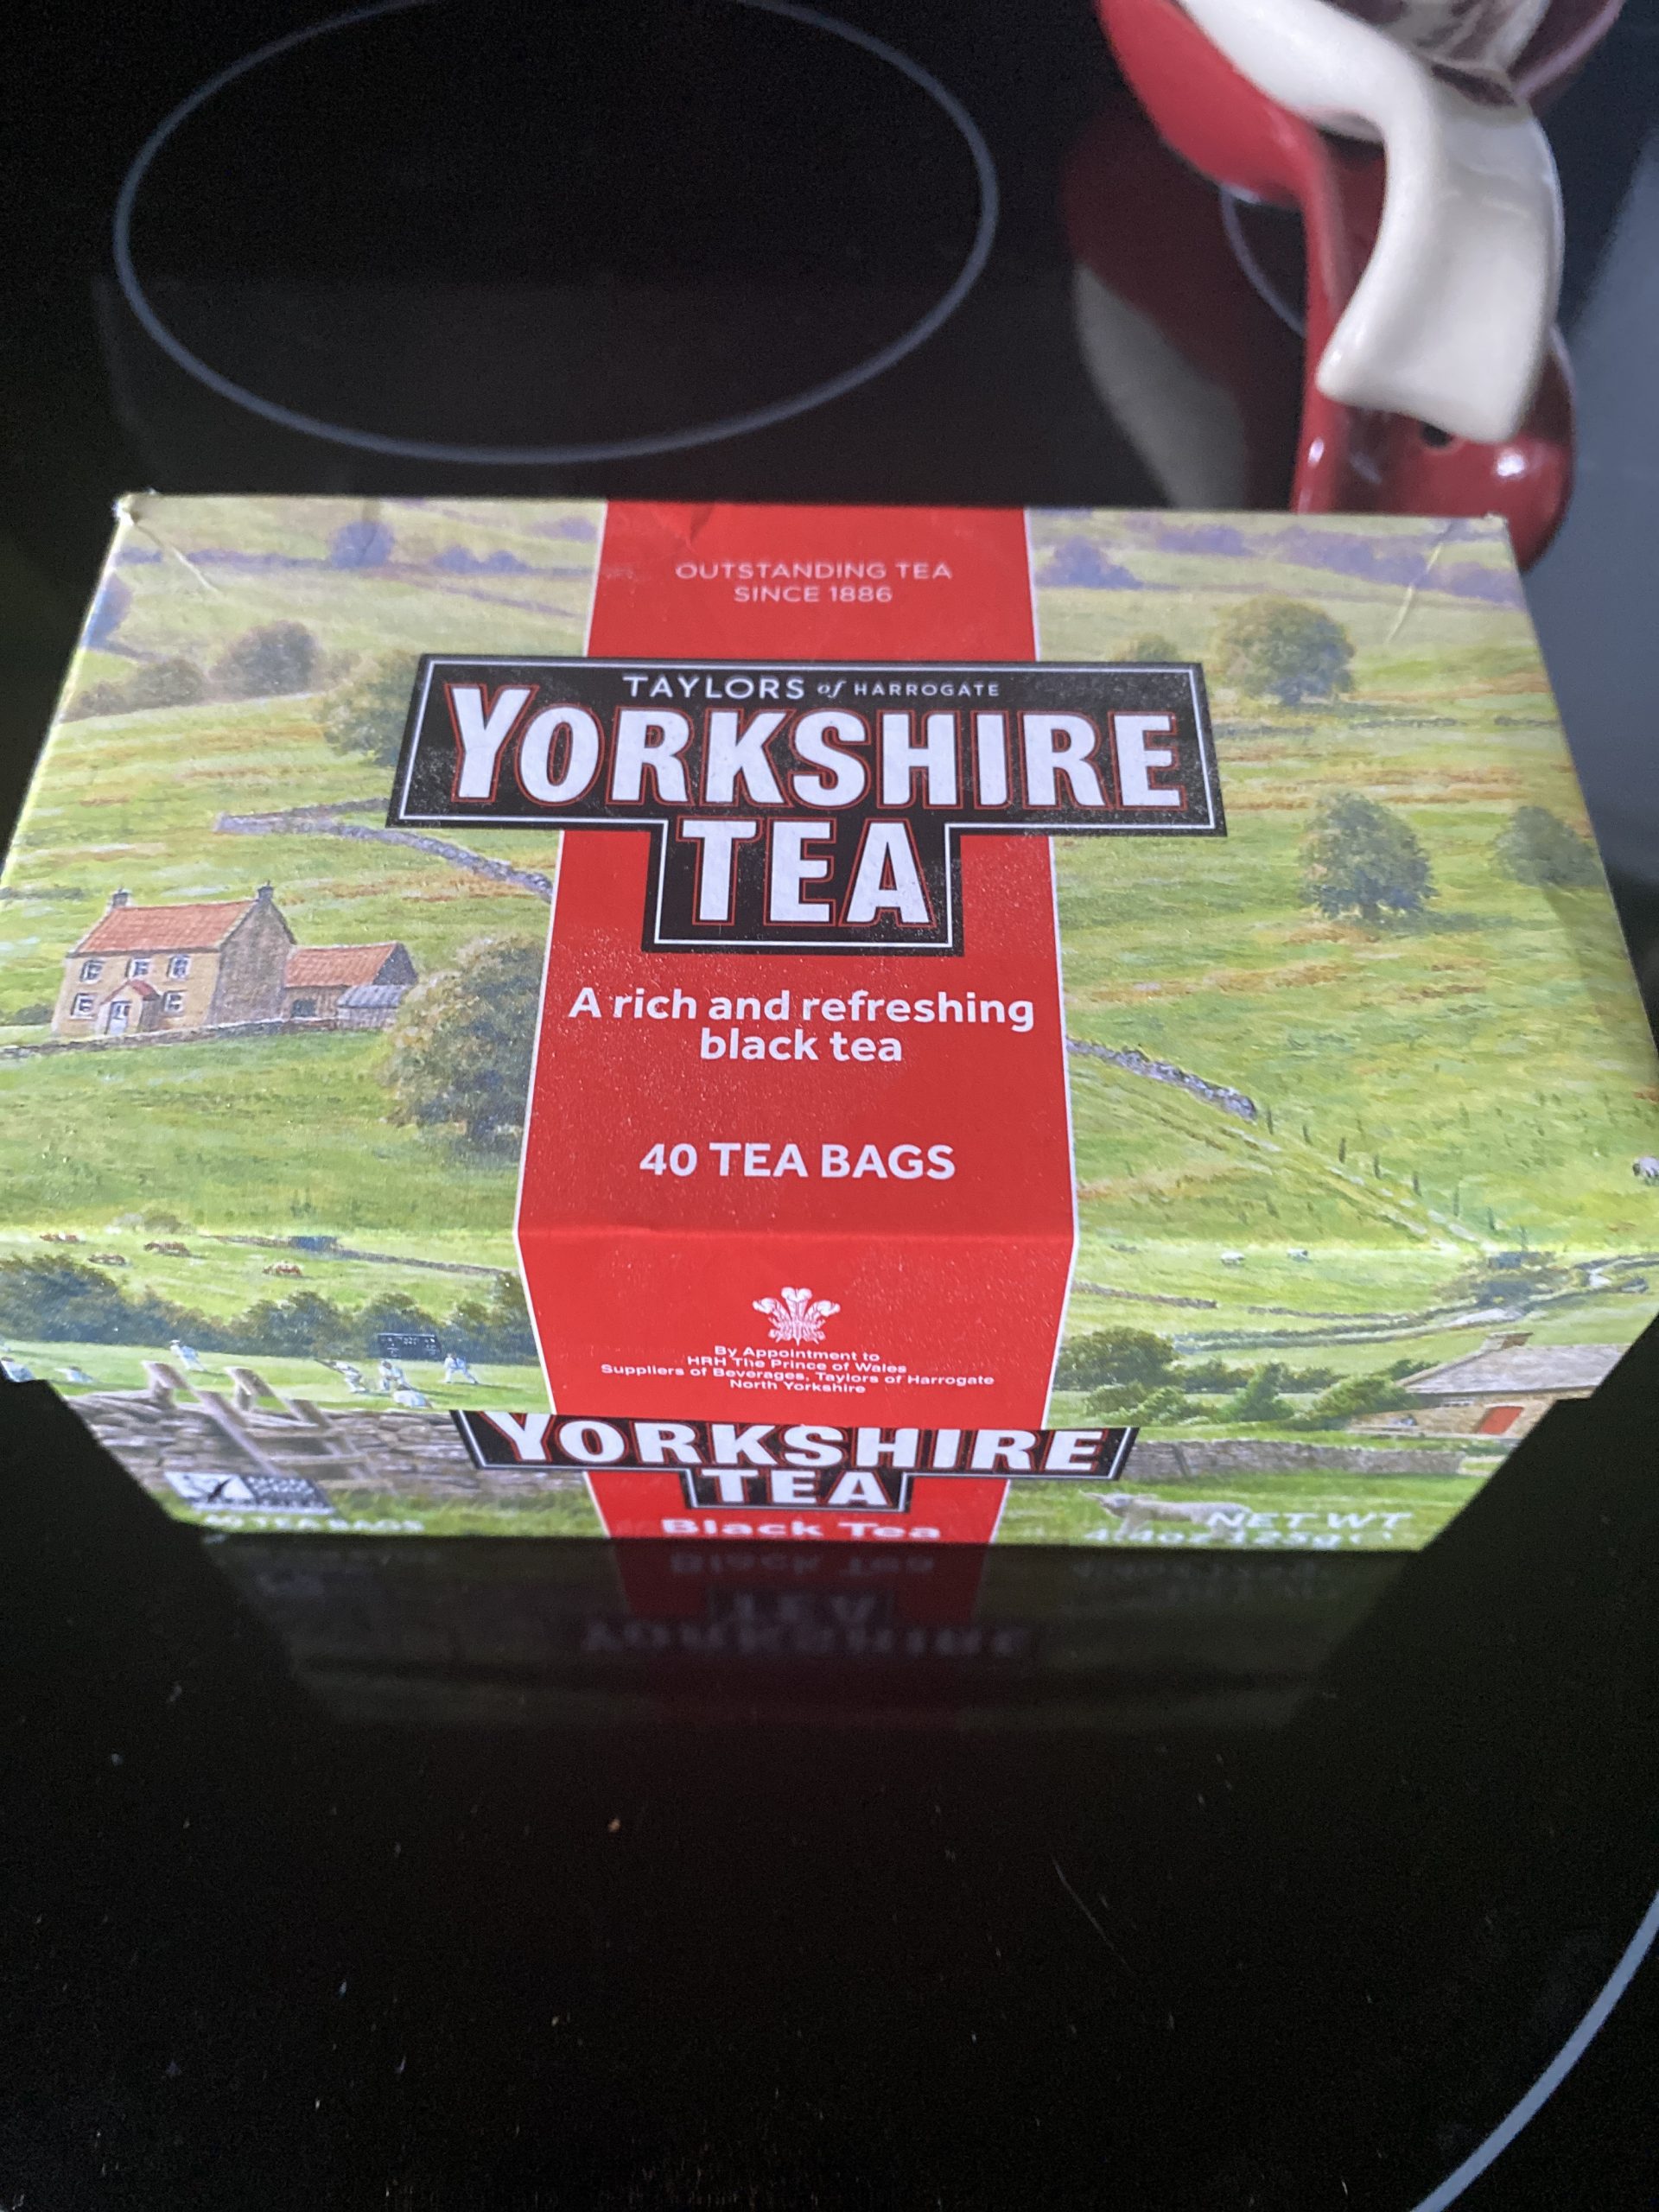 Box of Yorkshire tea on stove